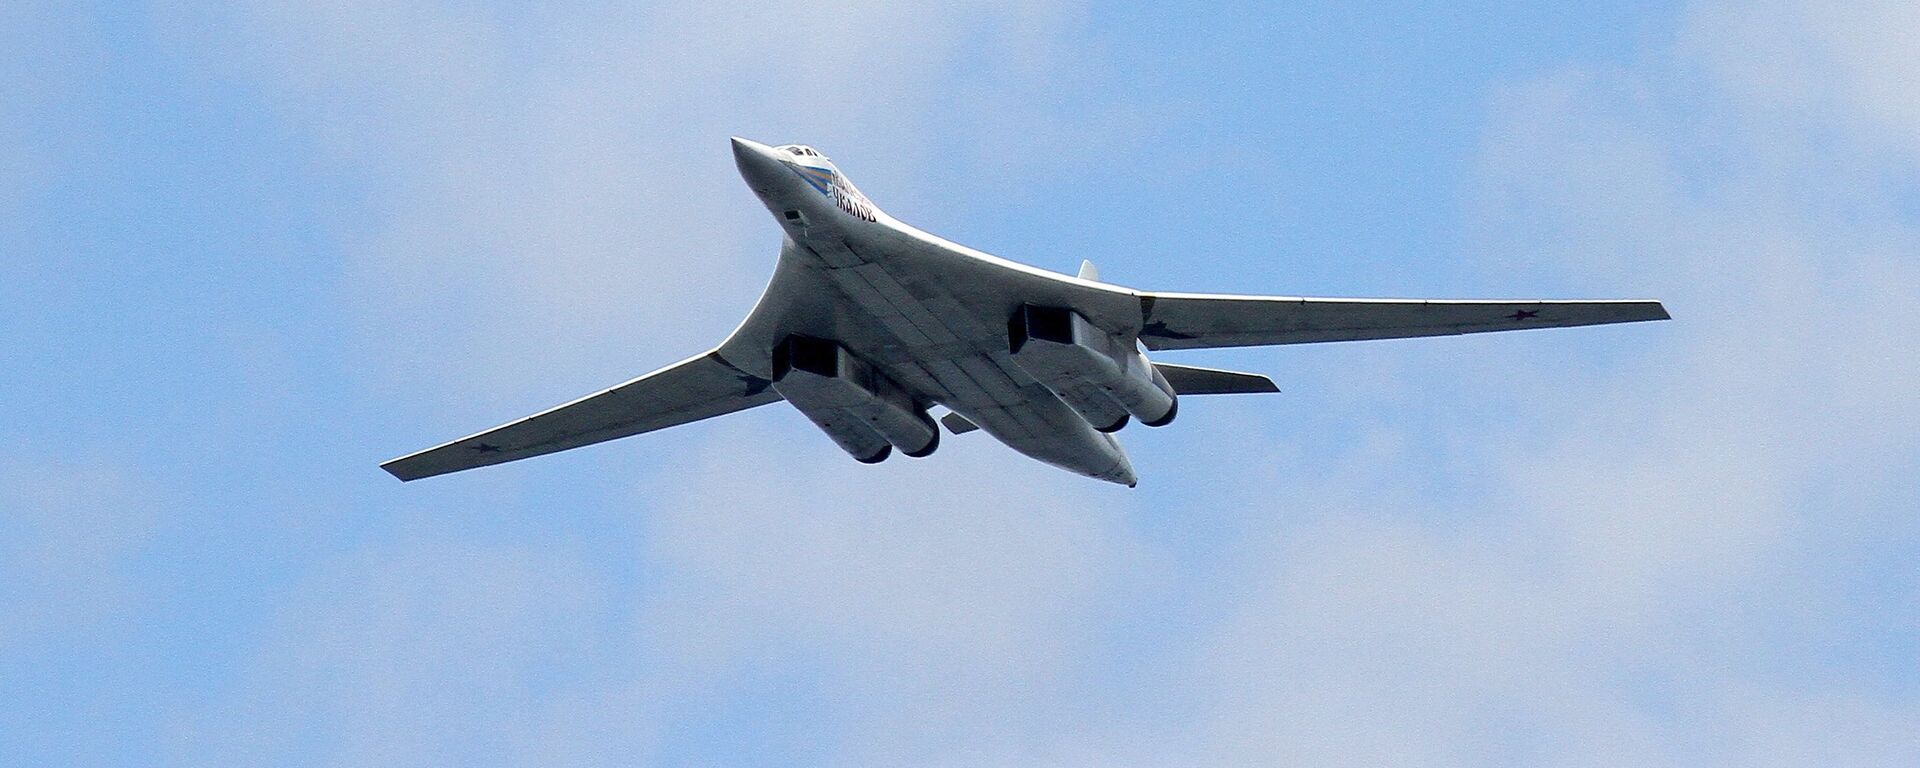 Tu-160 is a supersonic, variable-sweep wing heavy strategic bomber. - Sputnik Moldova, 1920, 21.09.2020